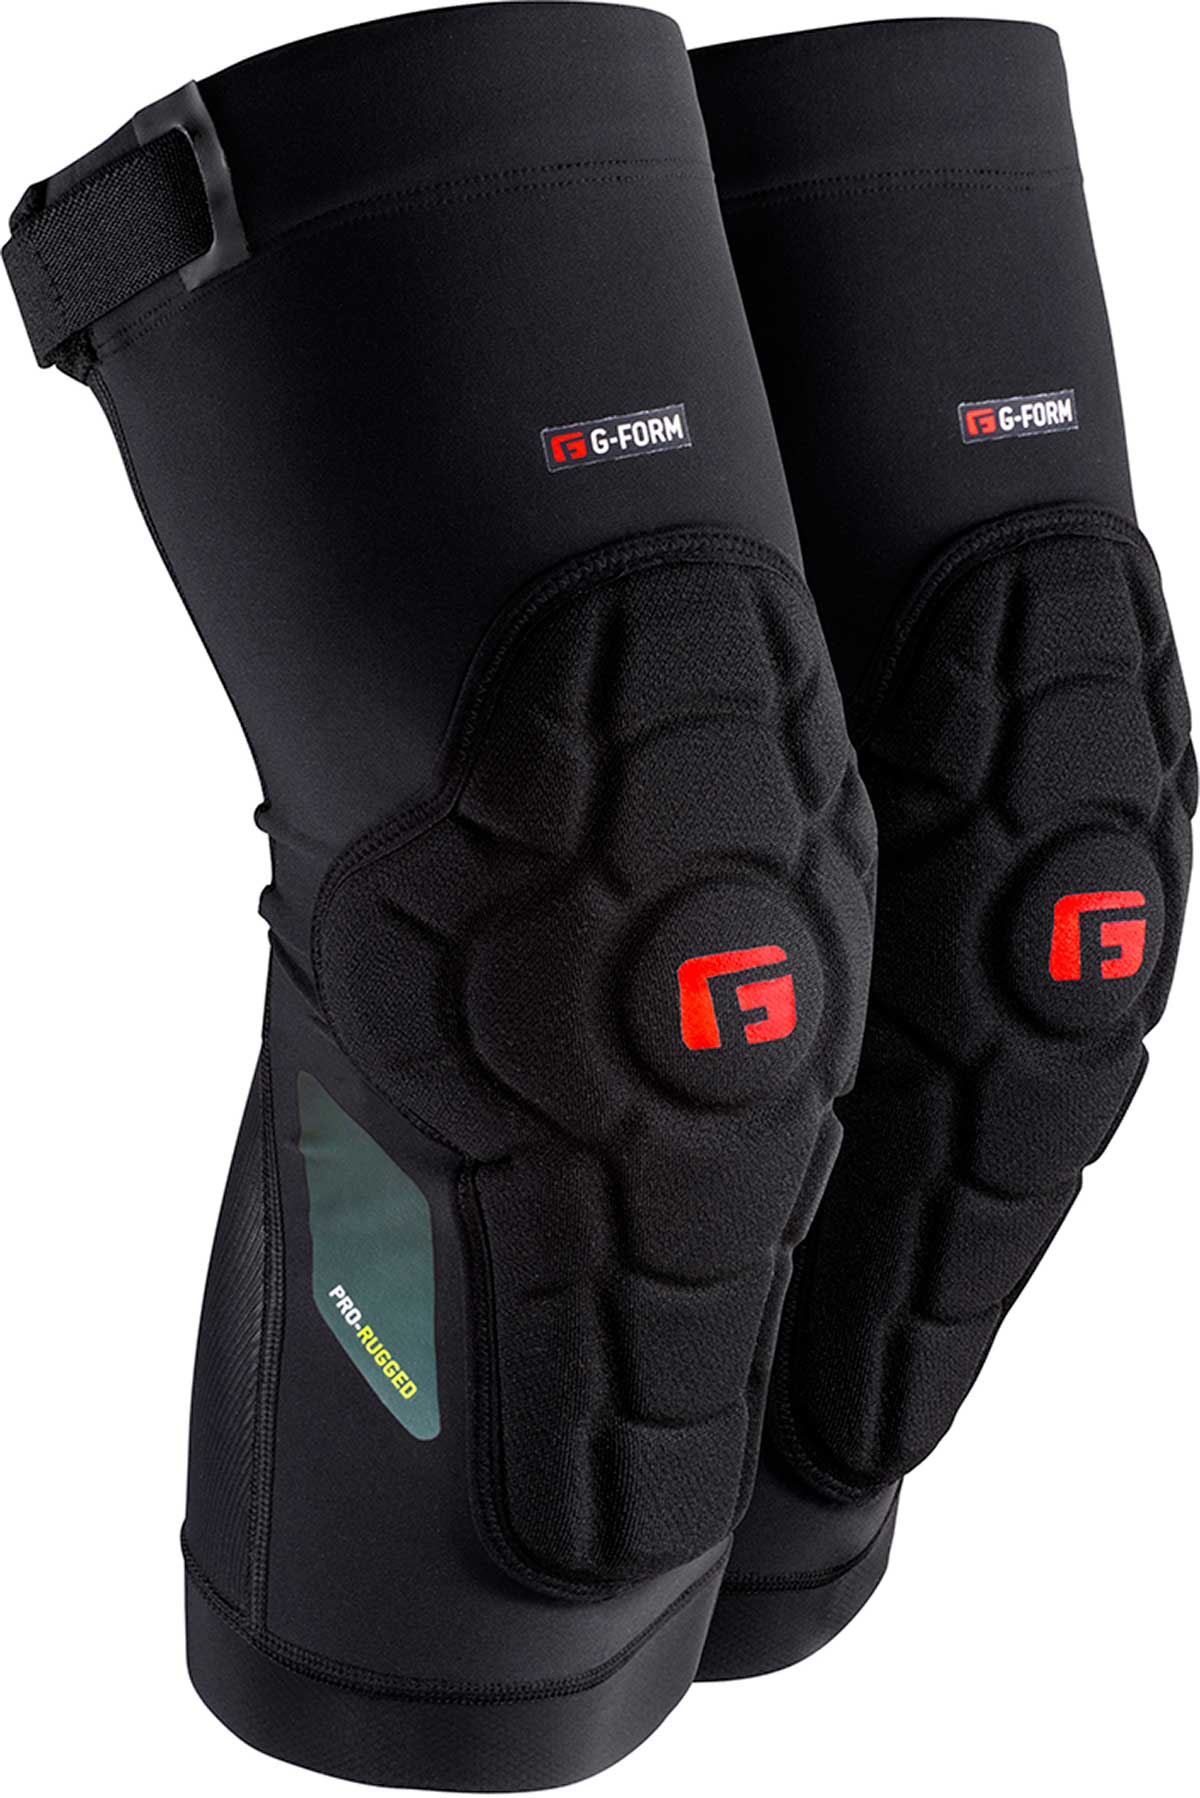 g-form knee pads